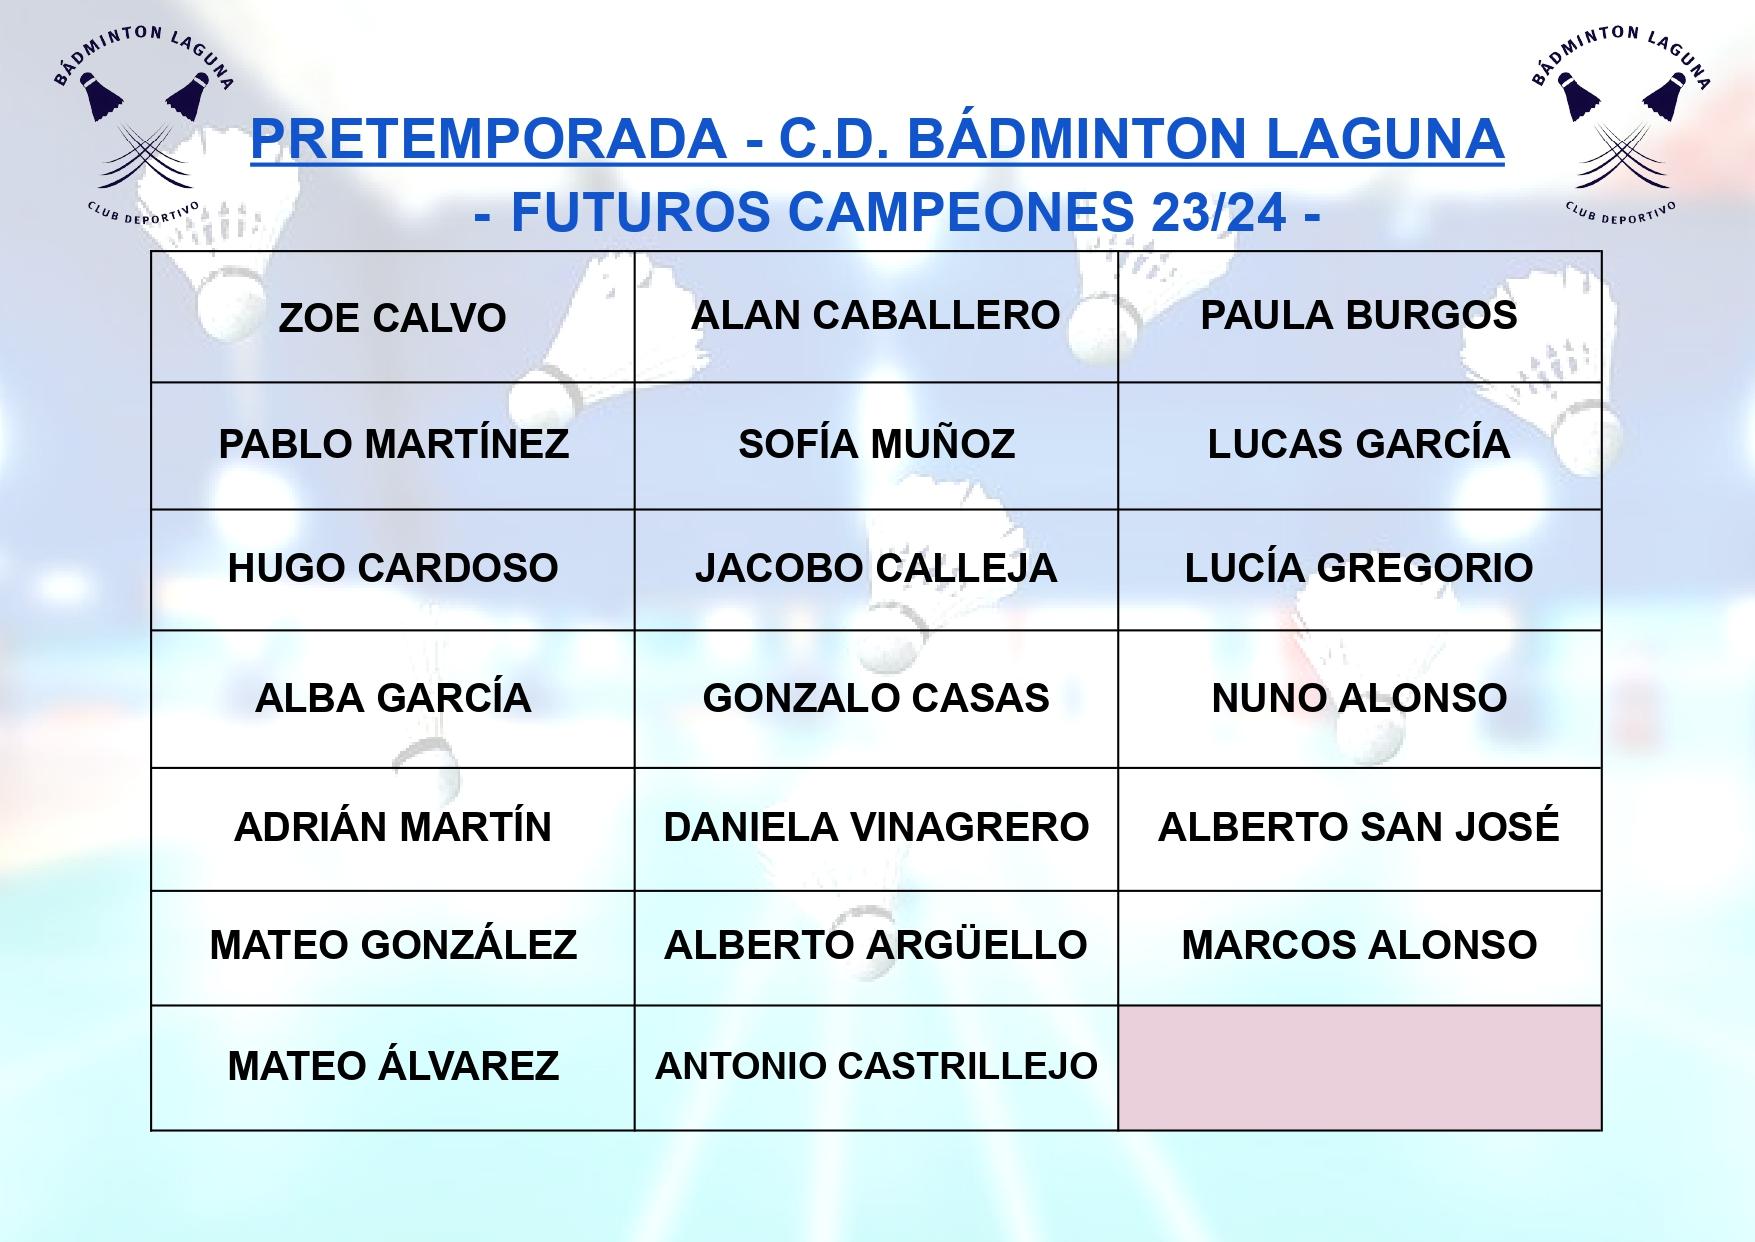 Pretemporada futuros campeones c d badminton laguna page 0001